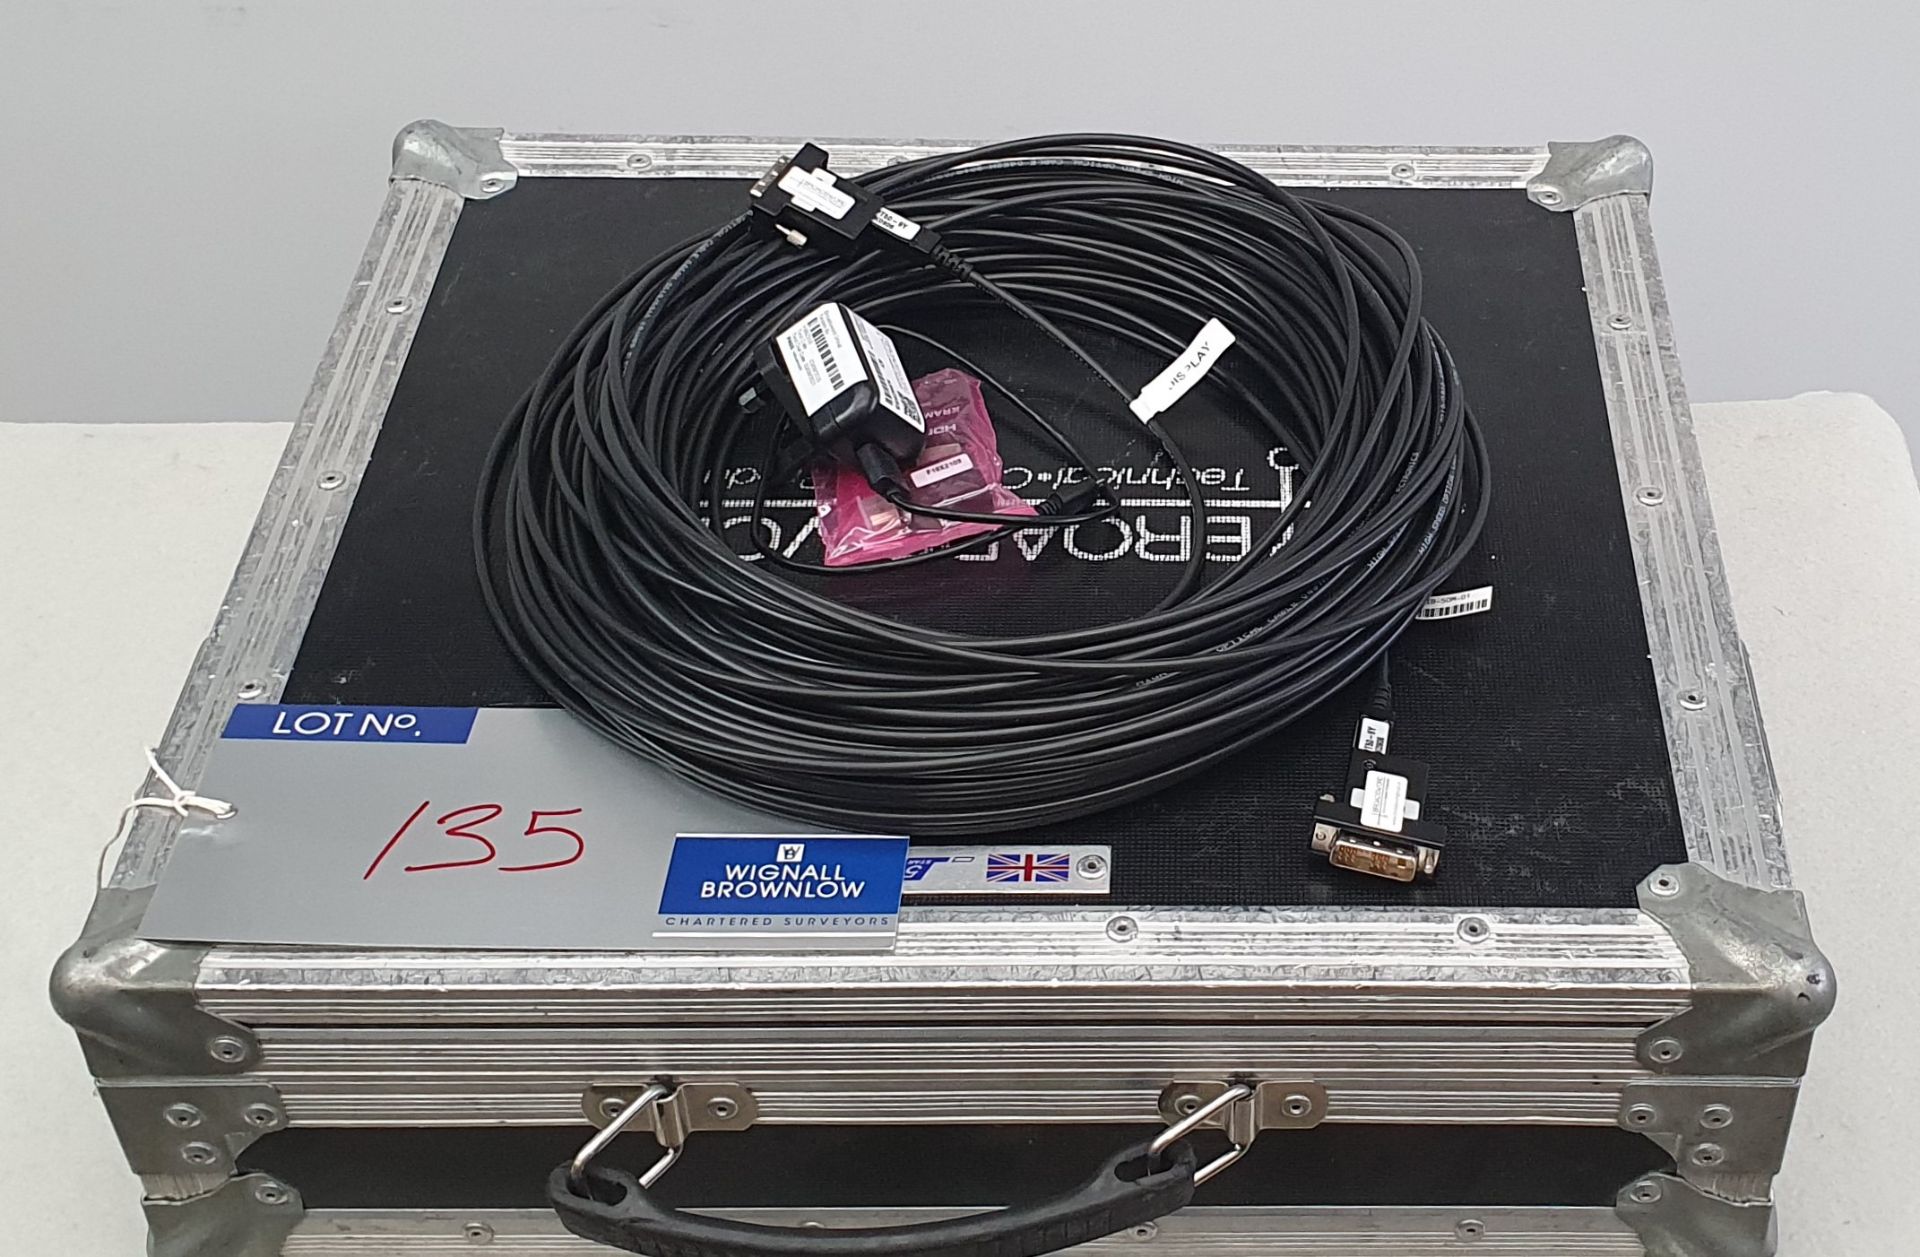 50m Kramer DVI Fibre Cable with PSU and slim 5star flight case, 440mm x 490mm x 150mm.